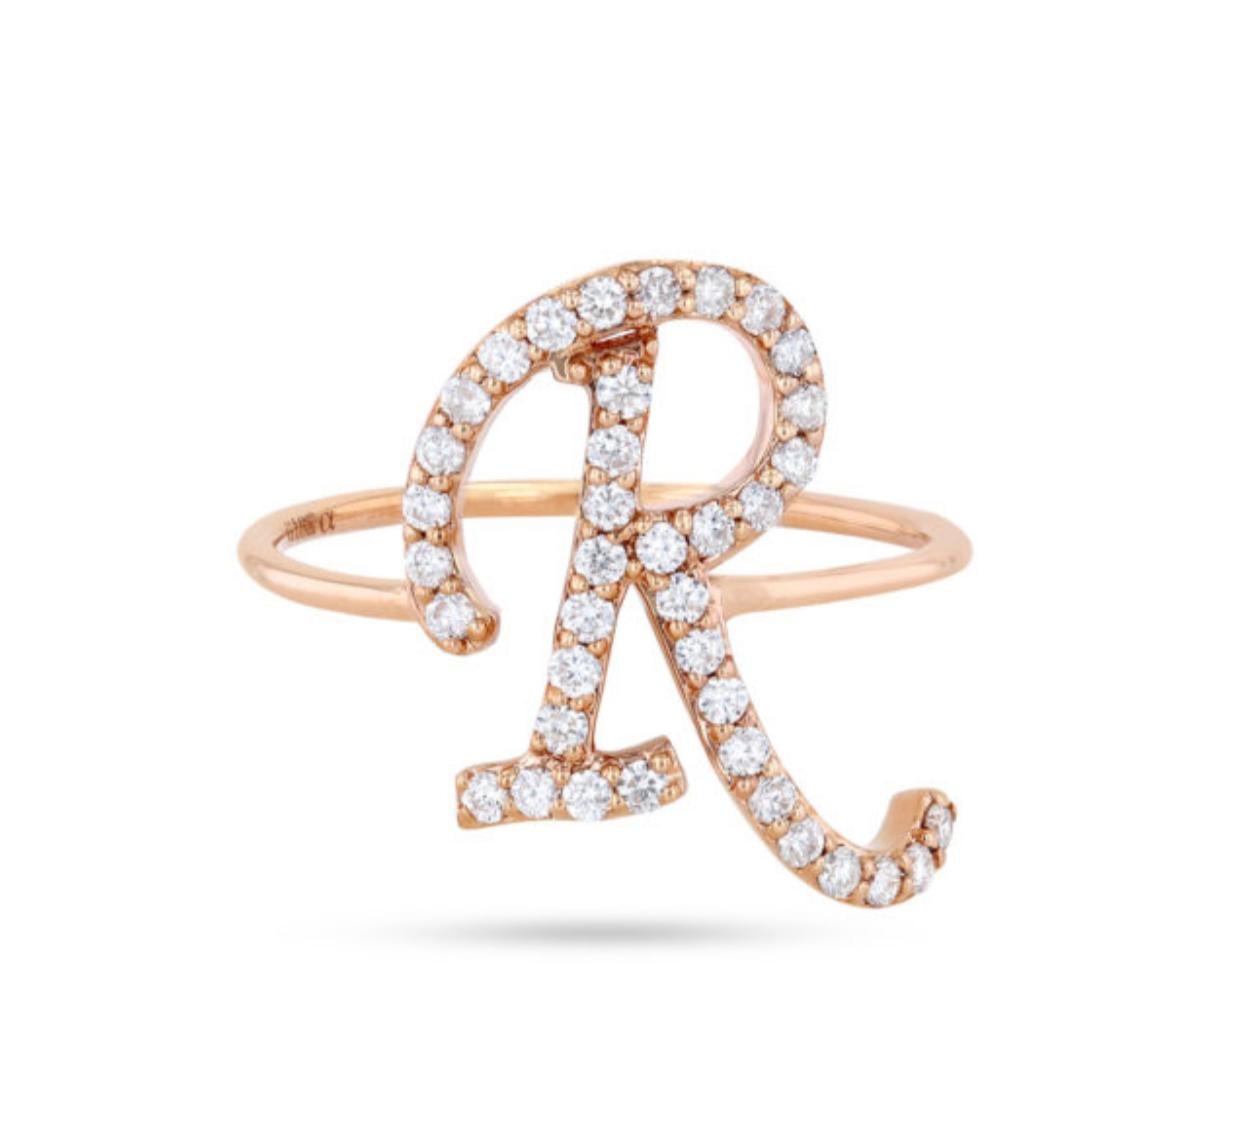 Panacheous jewelry- white gold & Diamond R ring